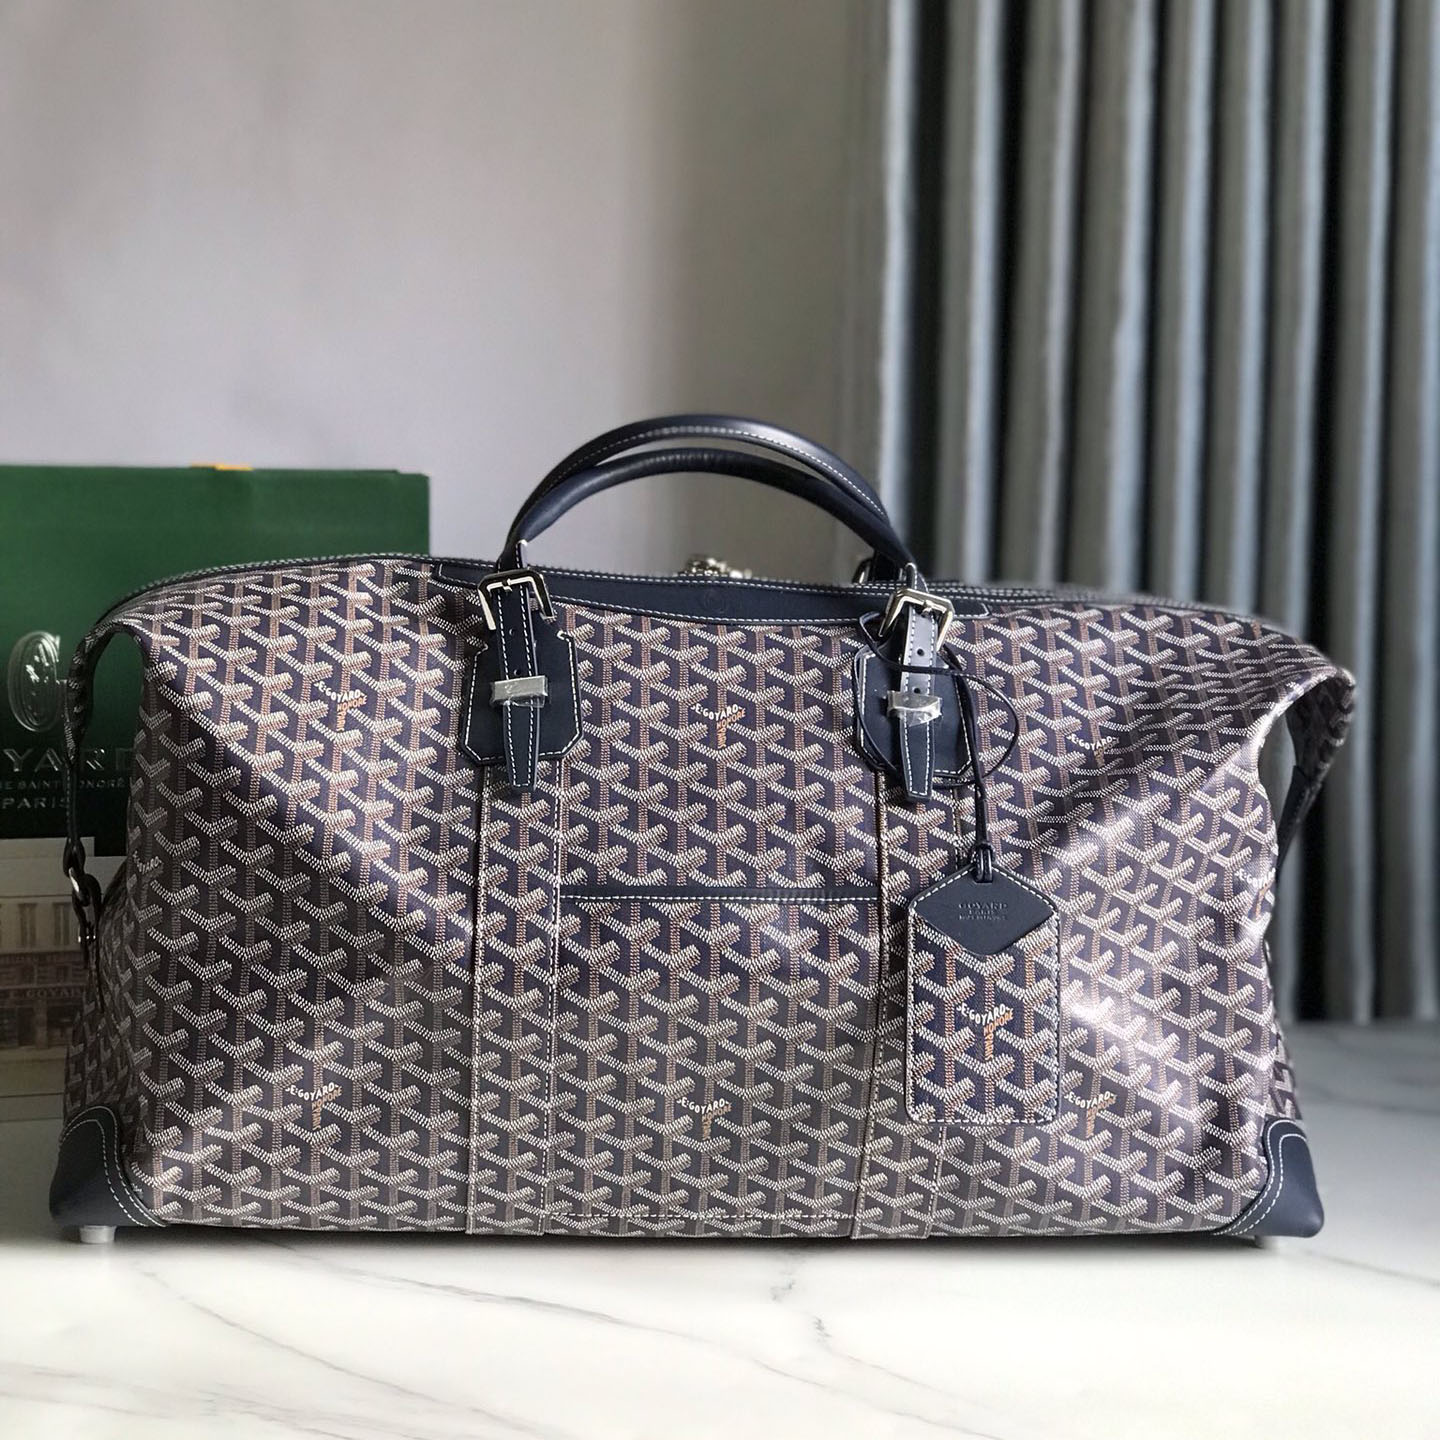 Goyard Travel Bags - Click Image to Close